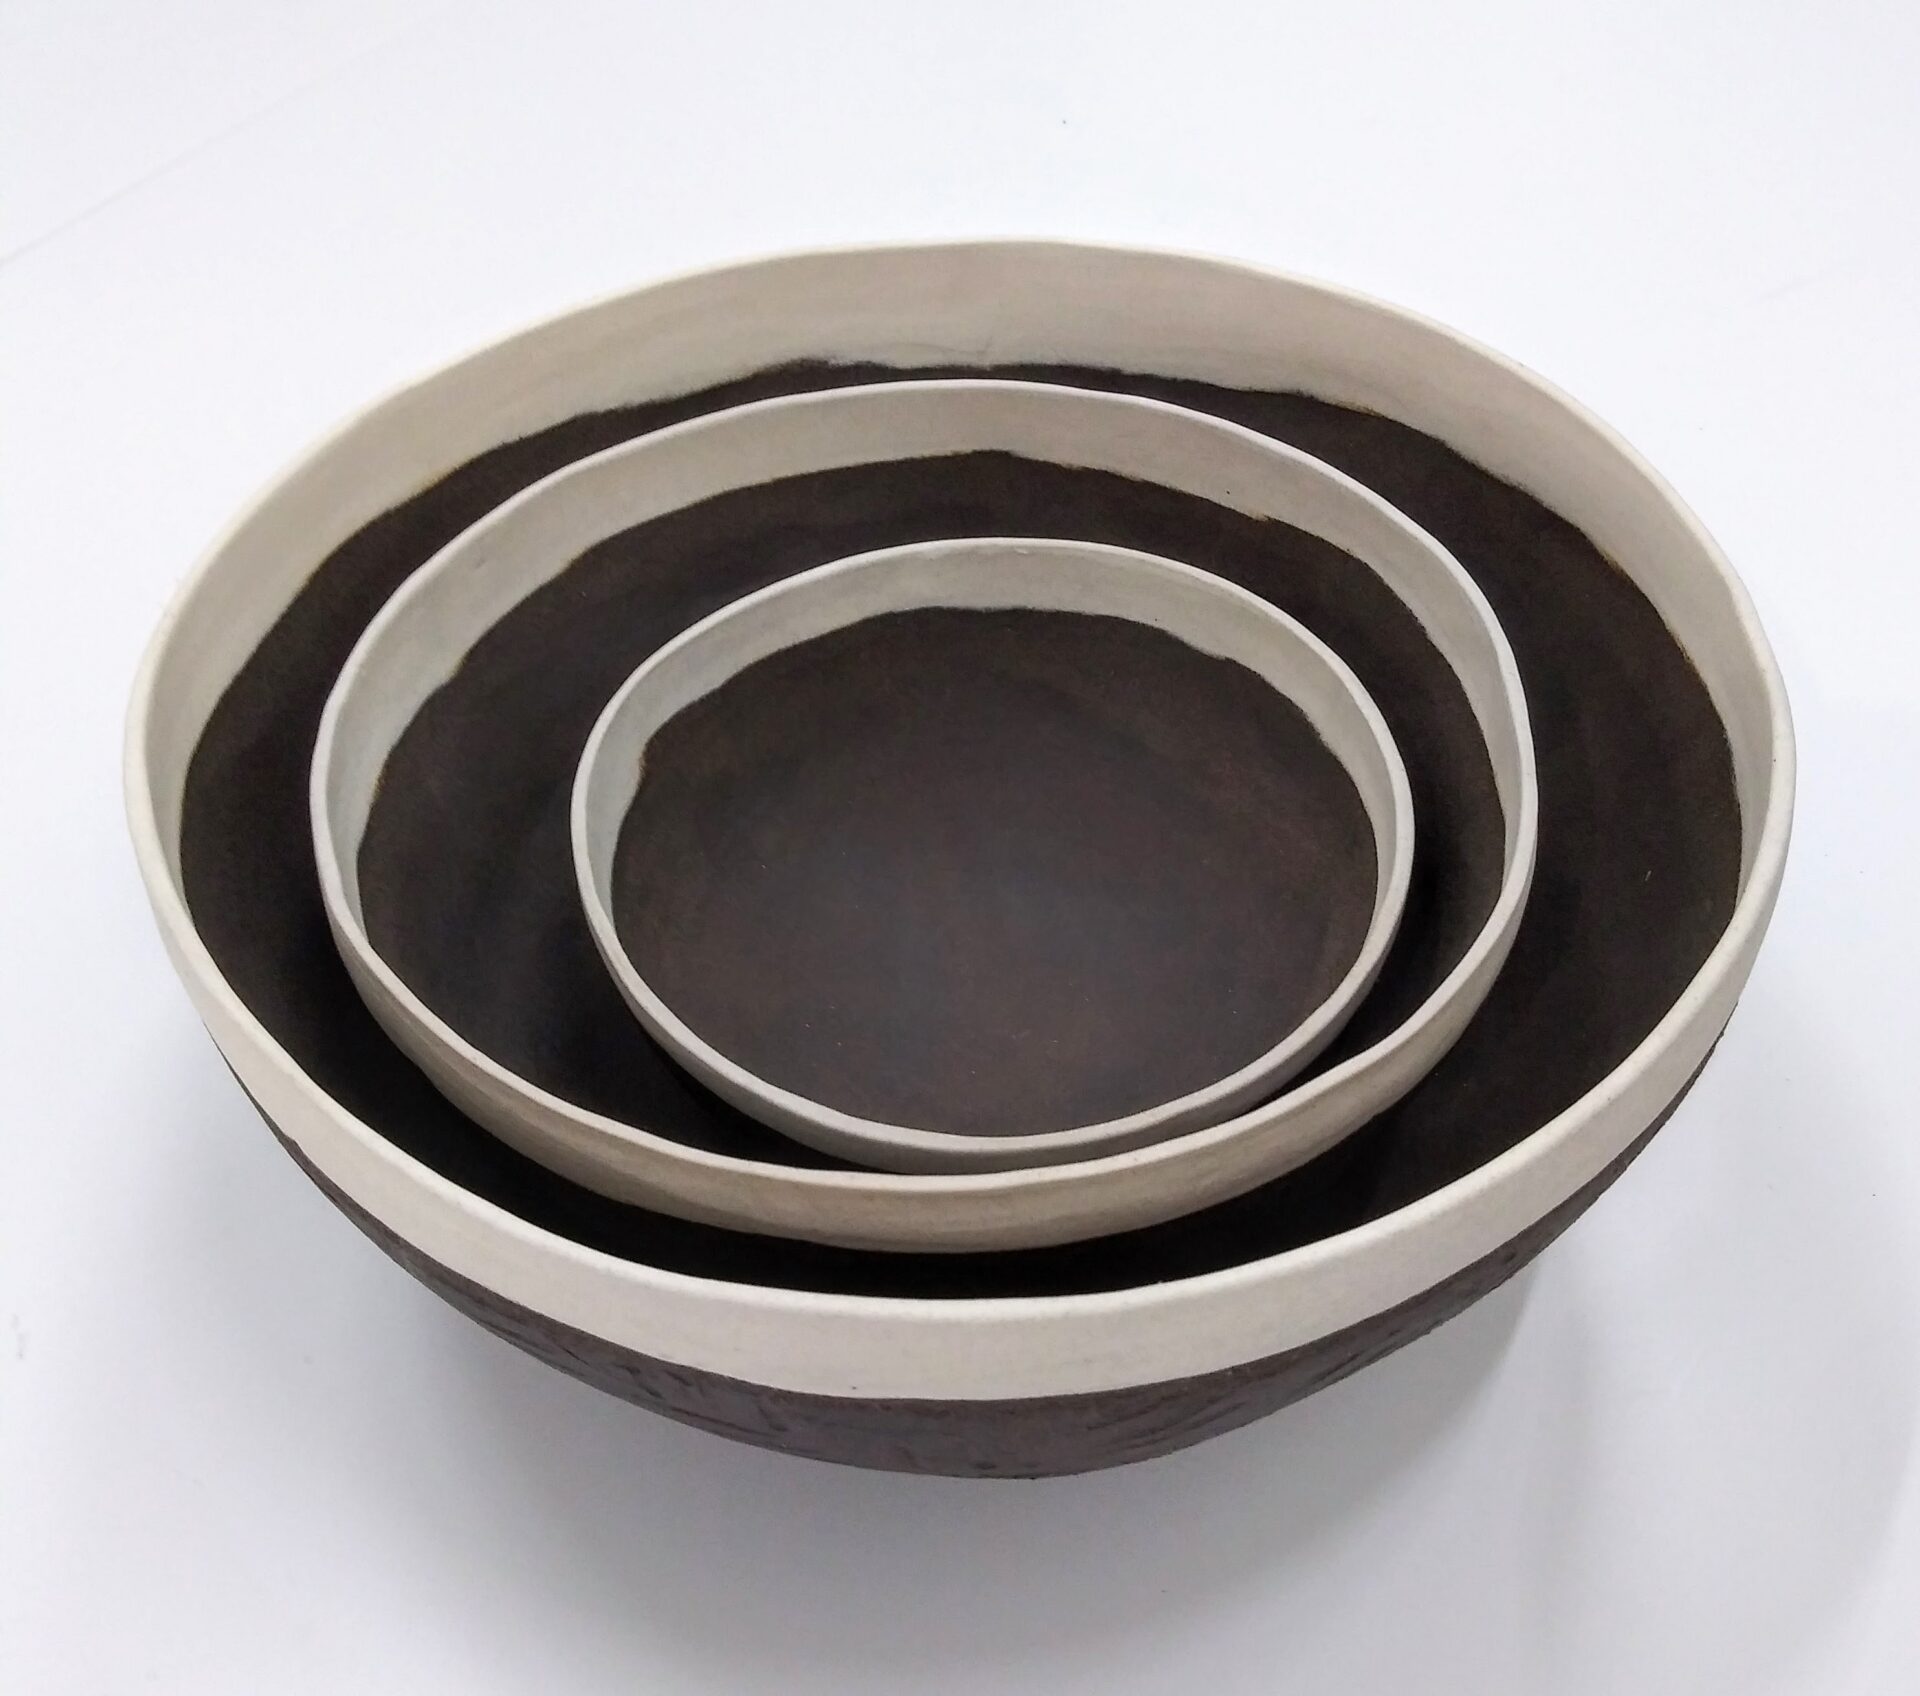 Ceramic art sculpture of three nested bowls